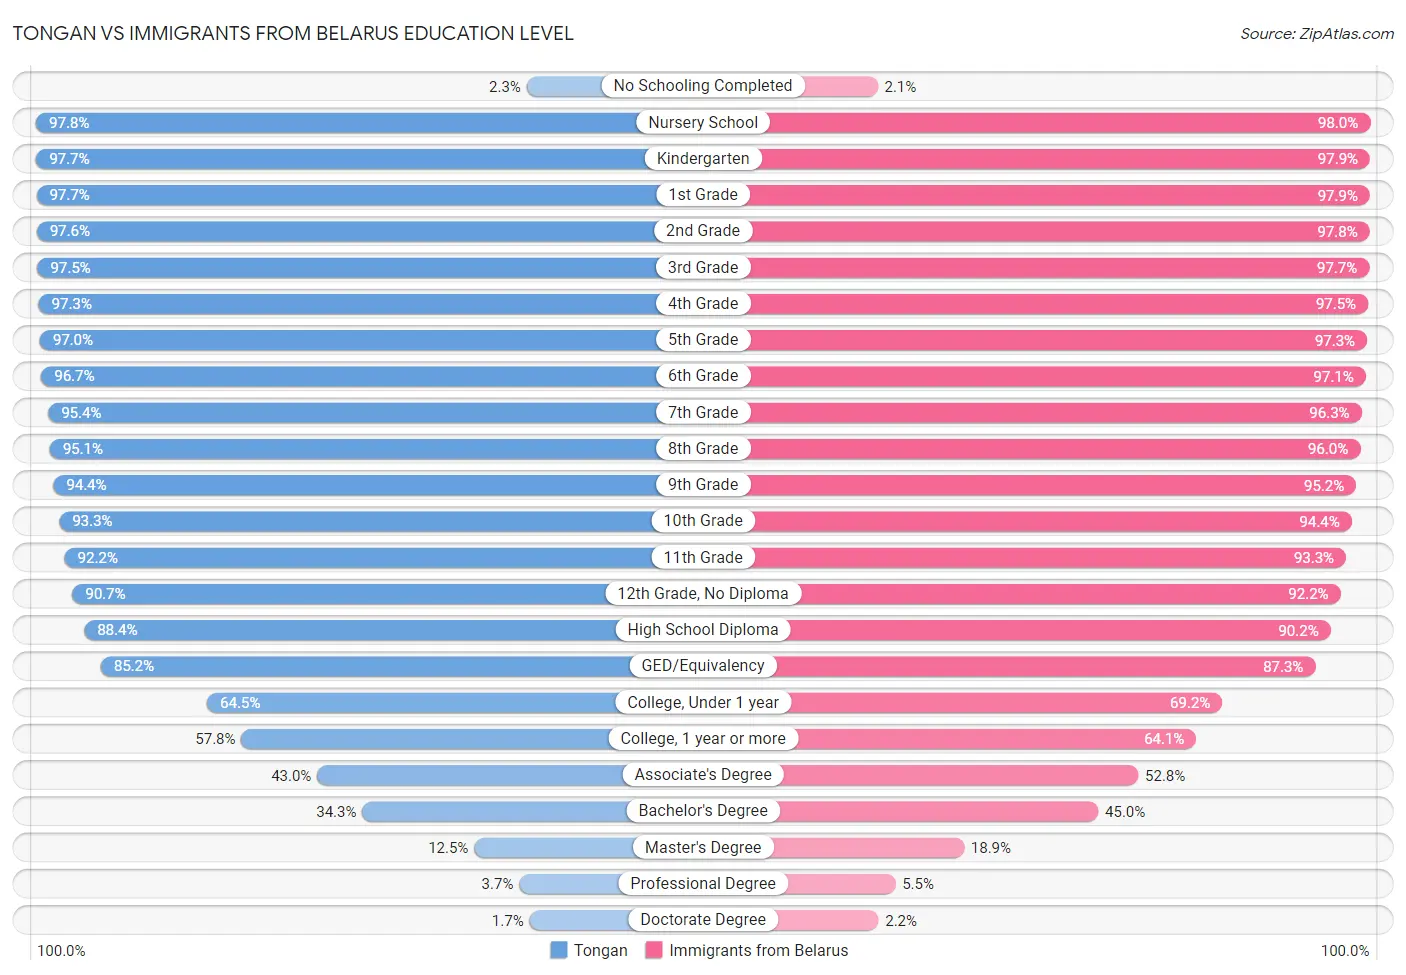 Tongan vs Immigrants from Belarus Education Level